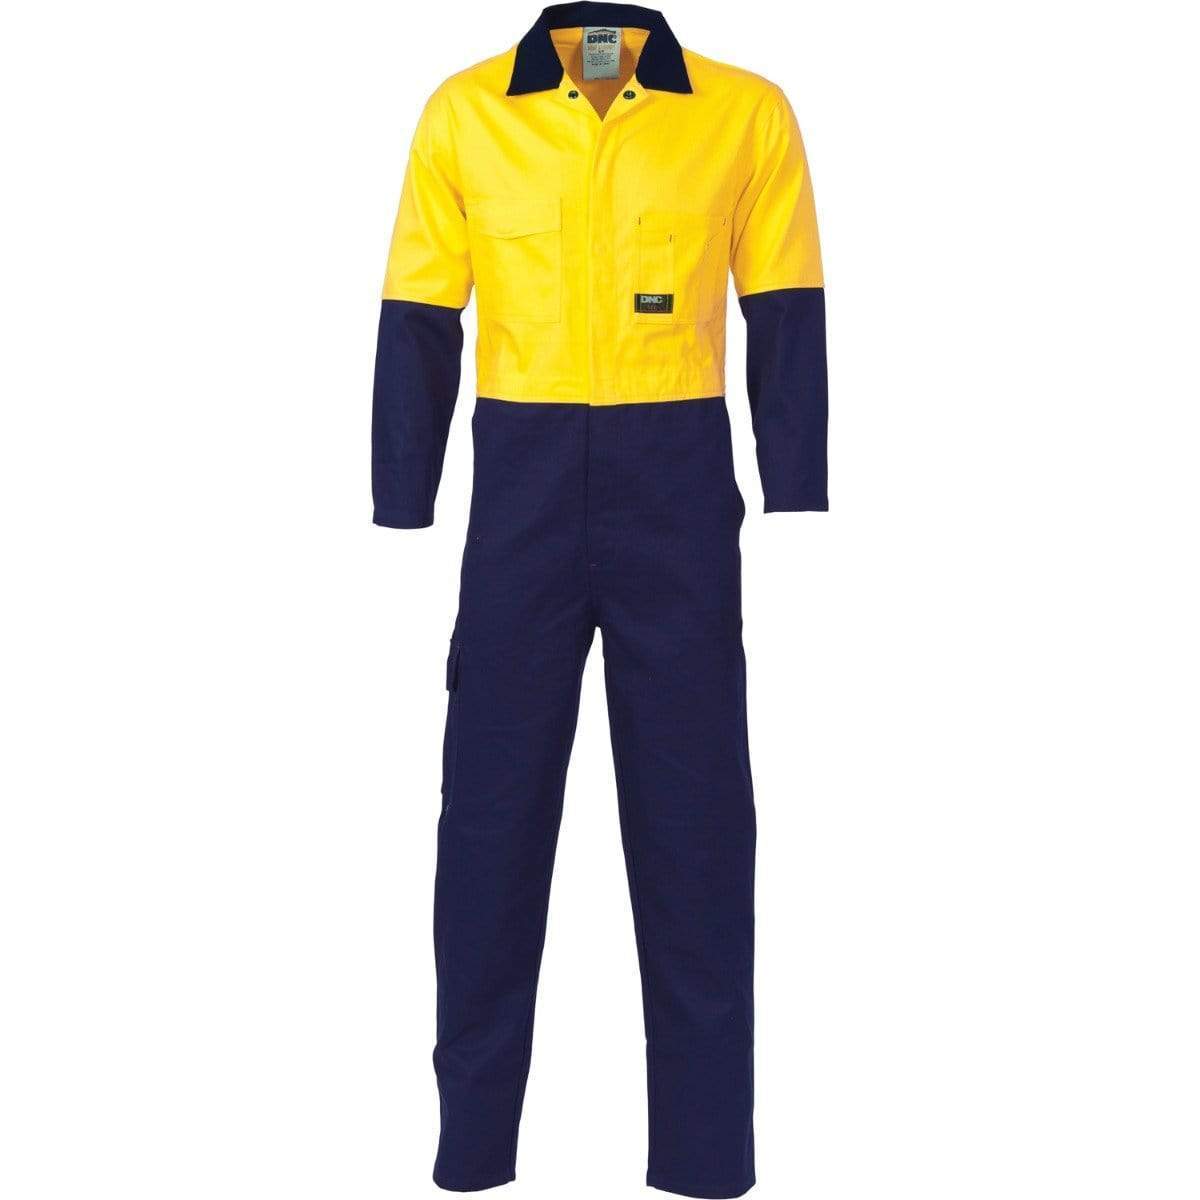 Dnc Workwear Hi-vis Cool-breeze 2-tone Lightweight Cotton Coverall - 3852 Work Wear DNC Workwear Yellow/Navy 77R 